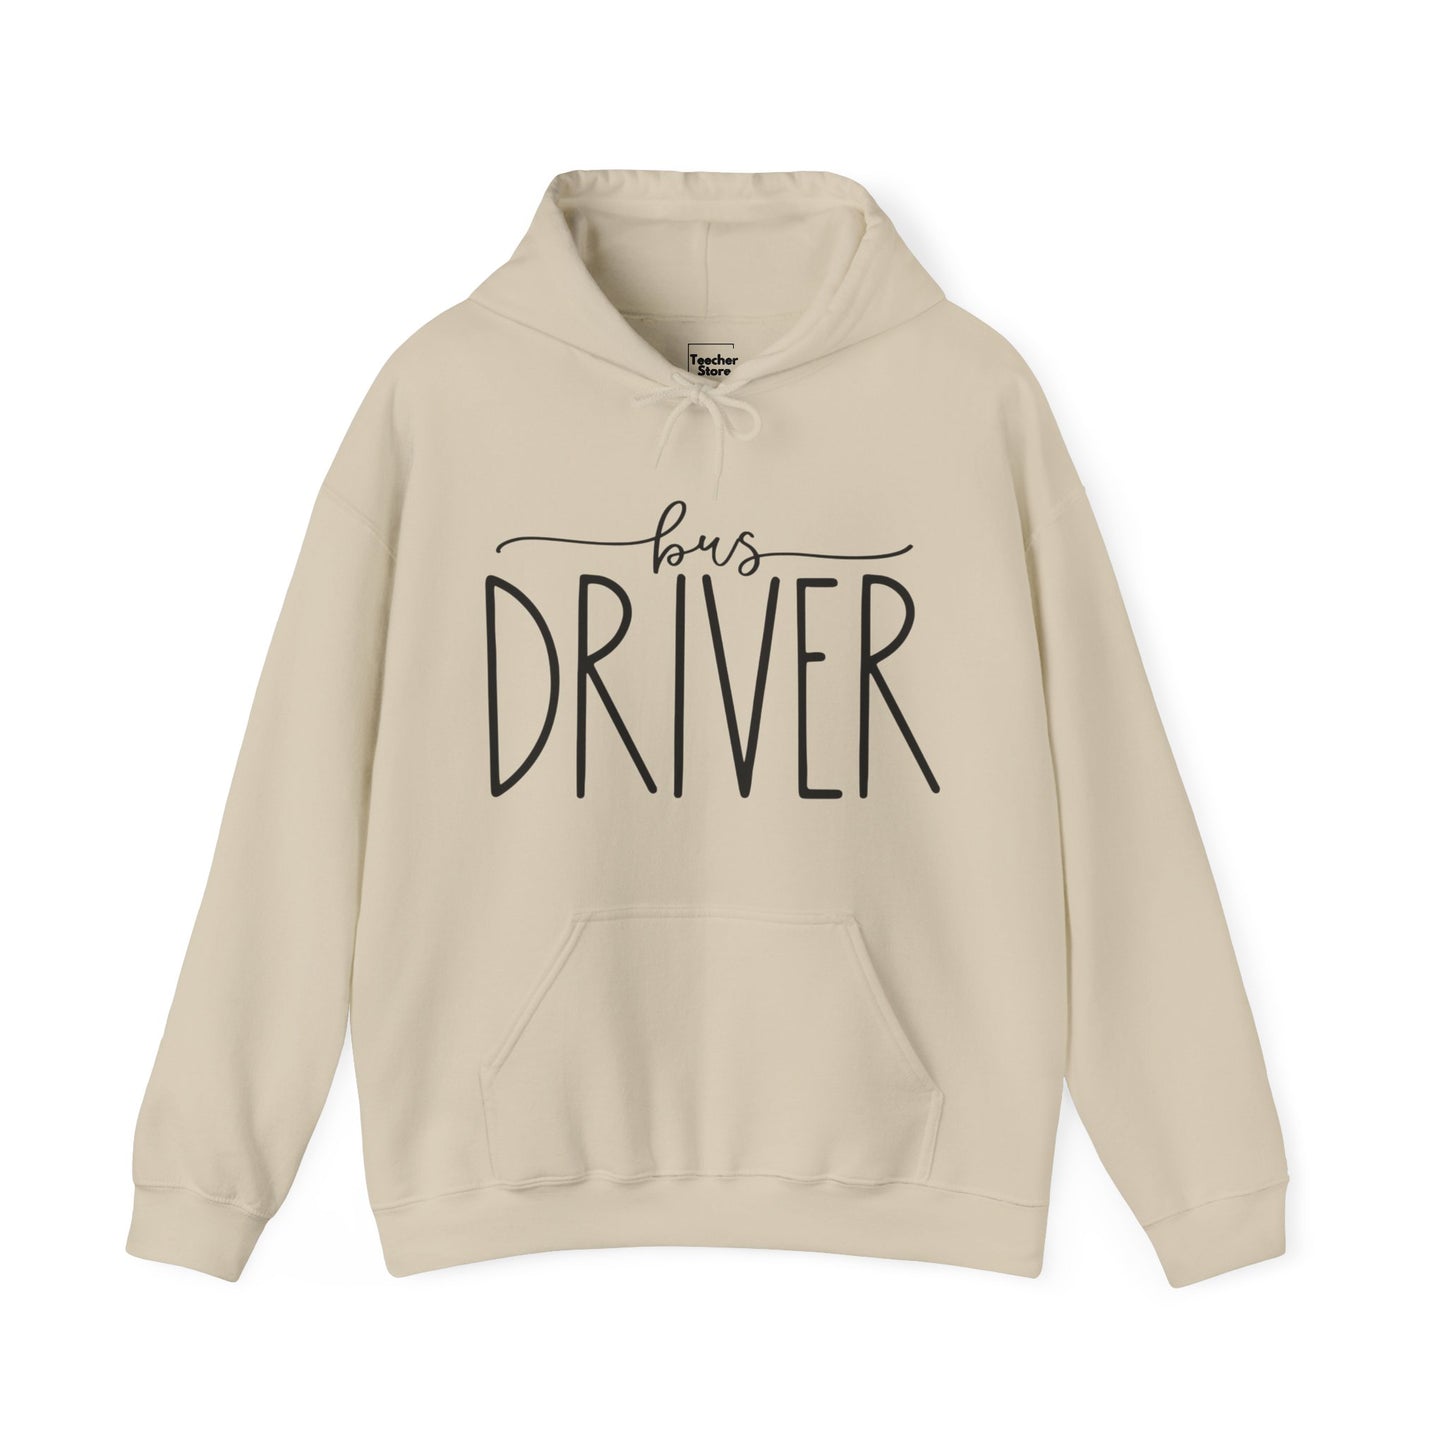 Driver Hooded Sweatshirt